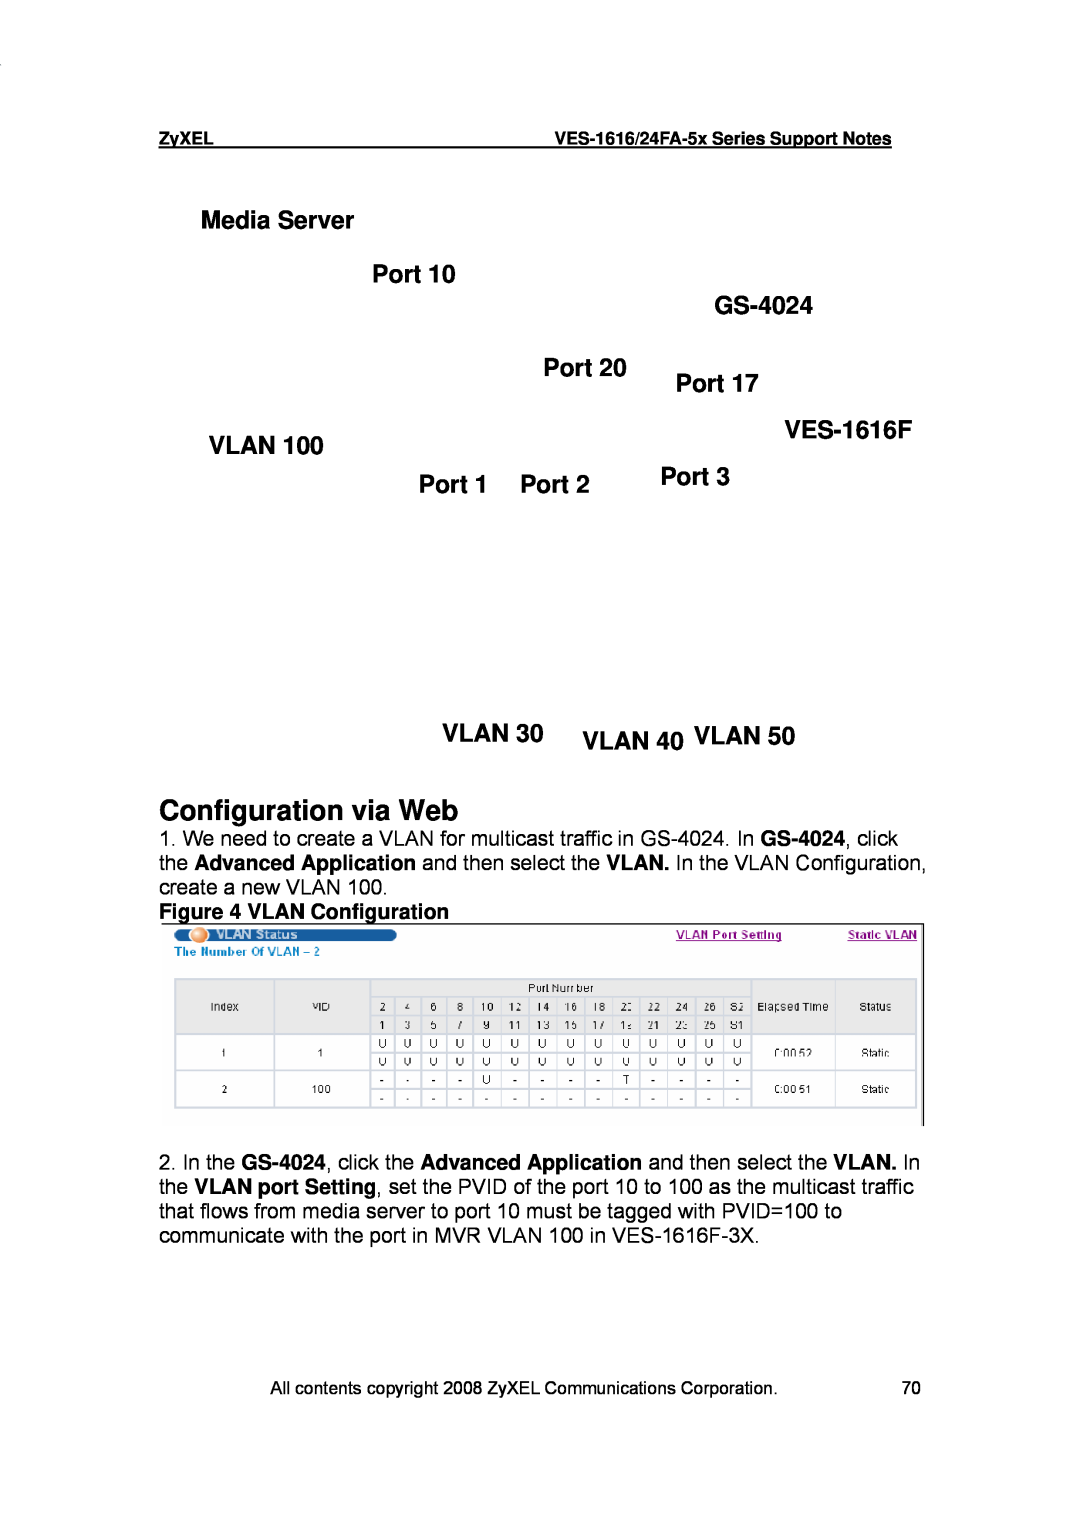 ZyXEL Communications manual Configuration via Web, Media Server, GS-4024, Vlan, VES-1616F, Port 1 Port 